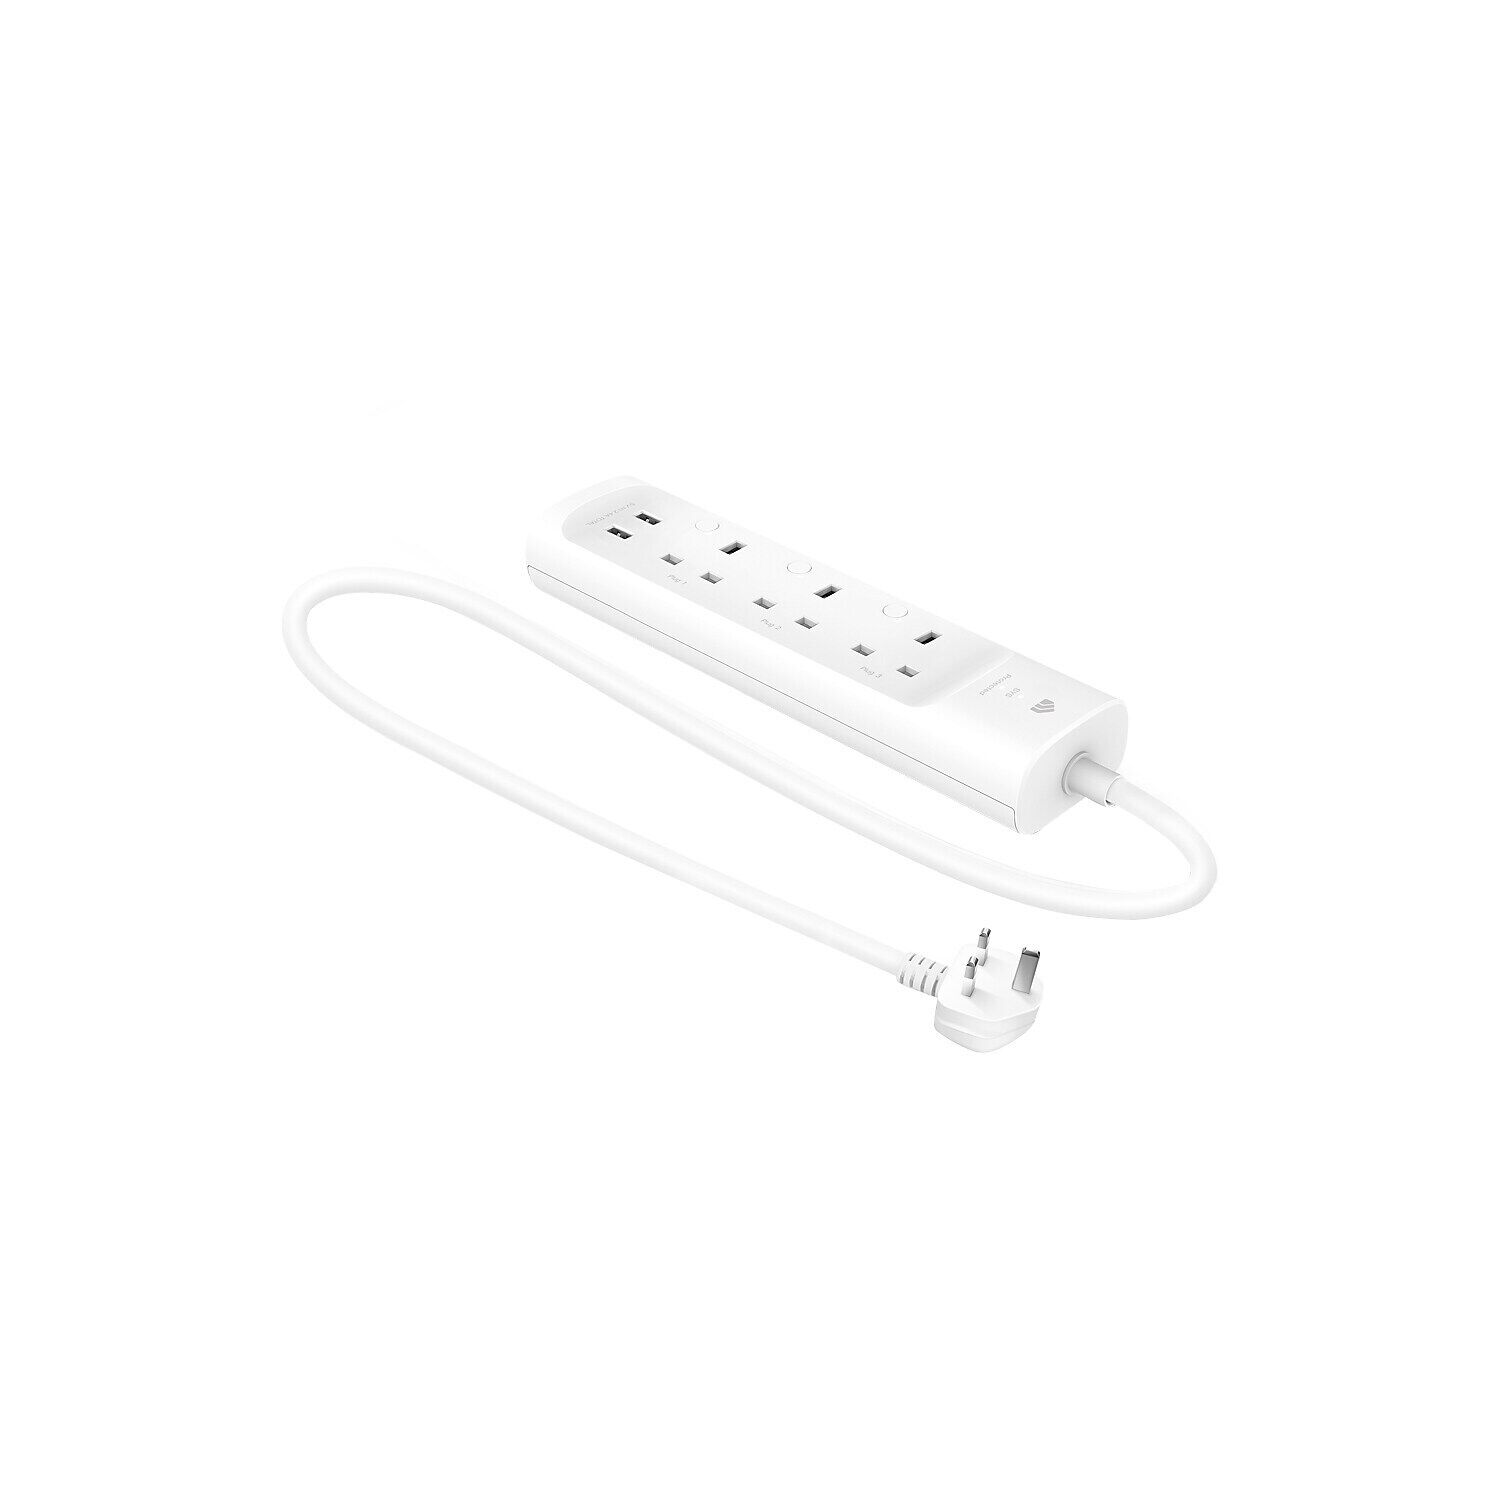 TP-LINK Kasa Smart 3-Outlet 2-USB Port Surge Protector White (KP303)